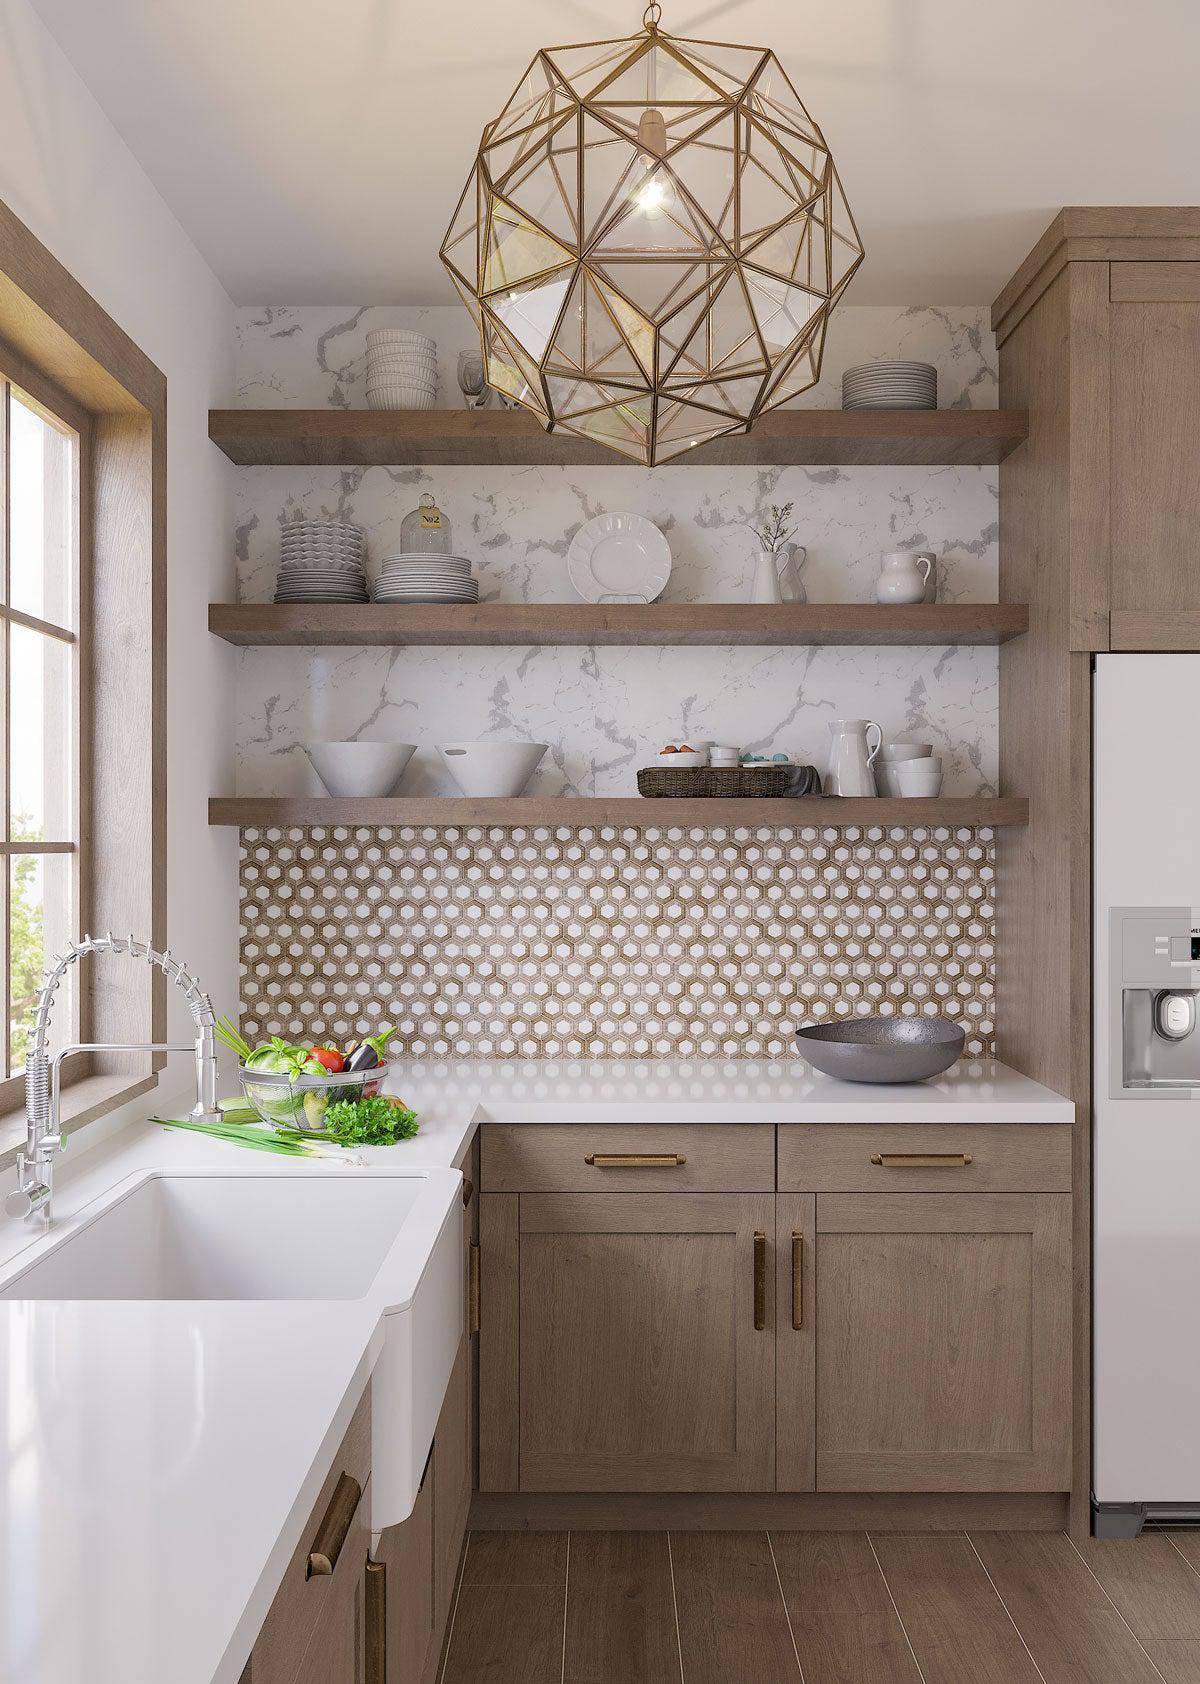 Rustic Farmhouse Kitchen with Wood Look Hexagon Tile Backsplash